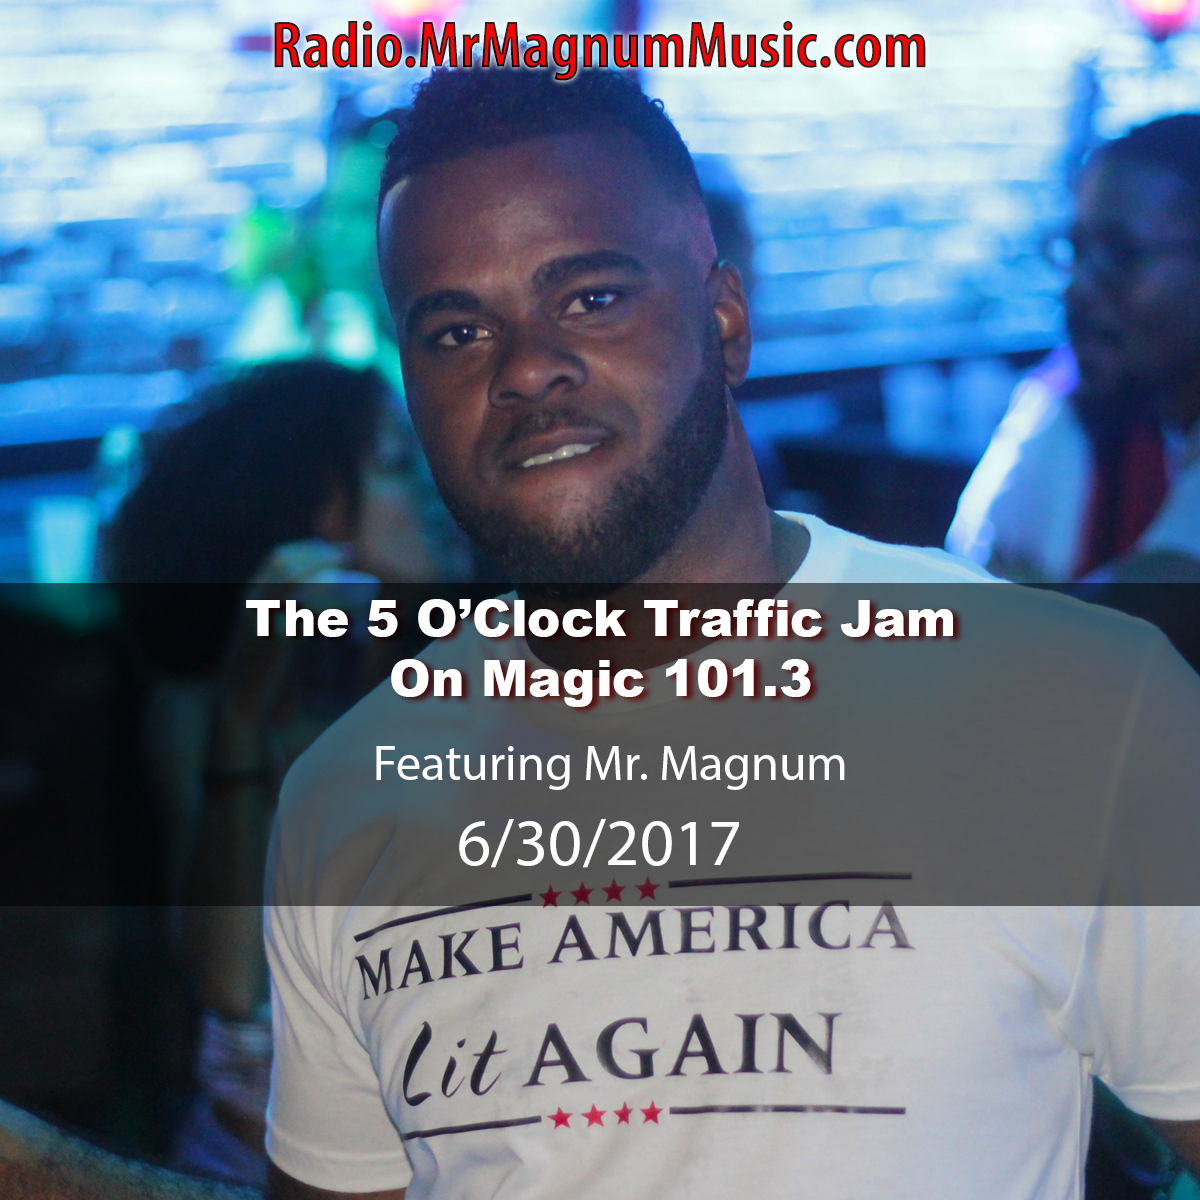 The 5 O'Clock Traffic Jam 20170630 featuring Gainesville's #1 DJ, Mr. Magnum on Magic 101.3